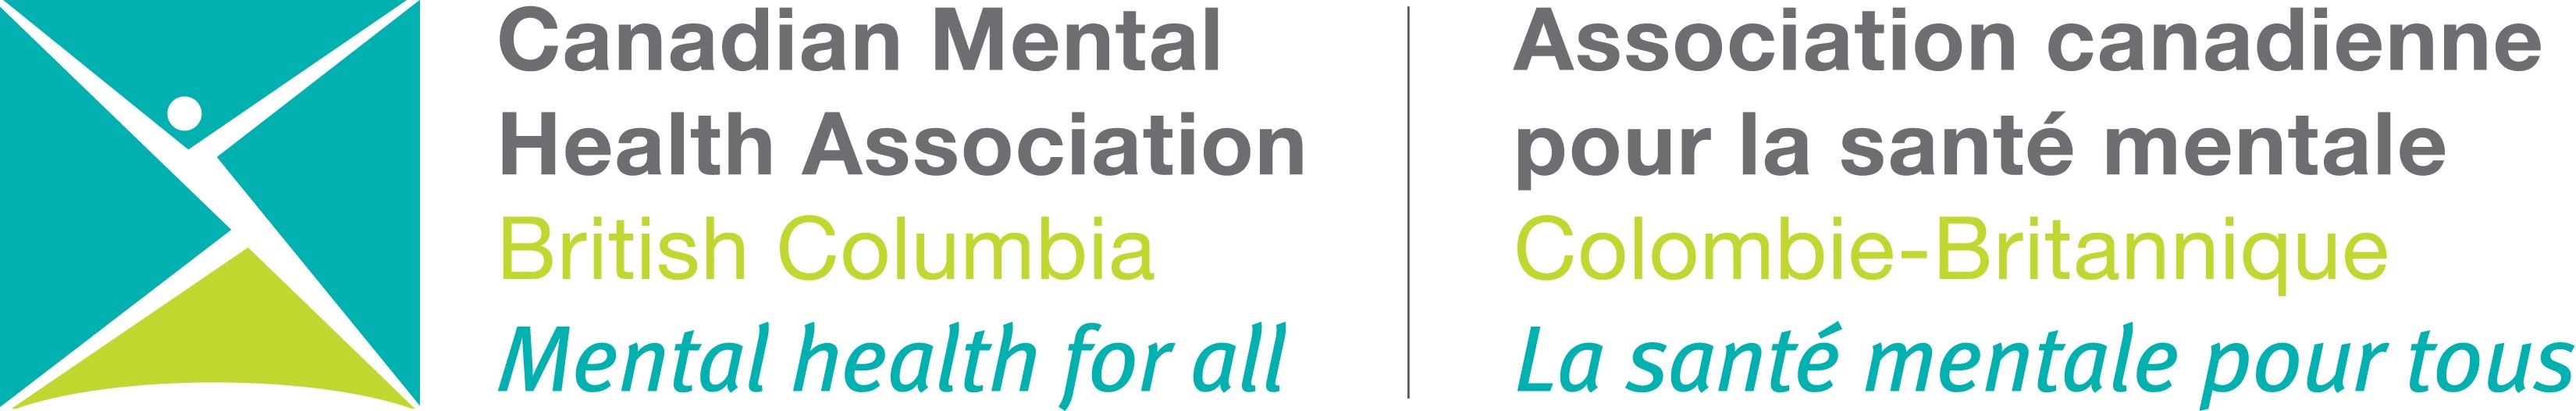 Canadian Mental Health - BC Division  logo